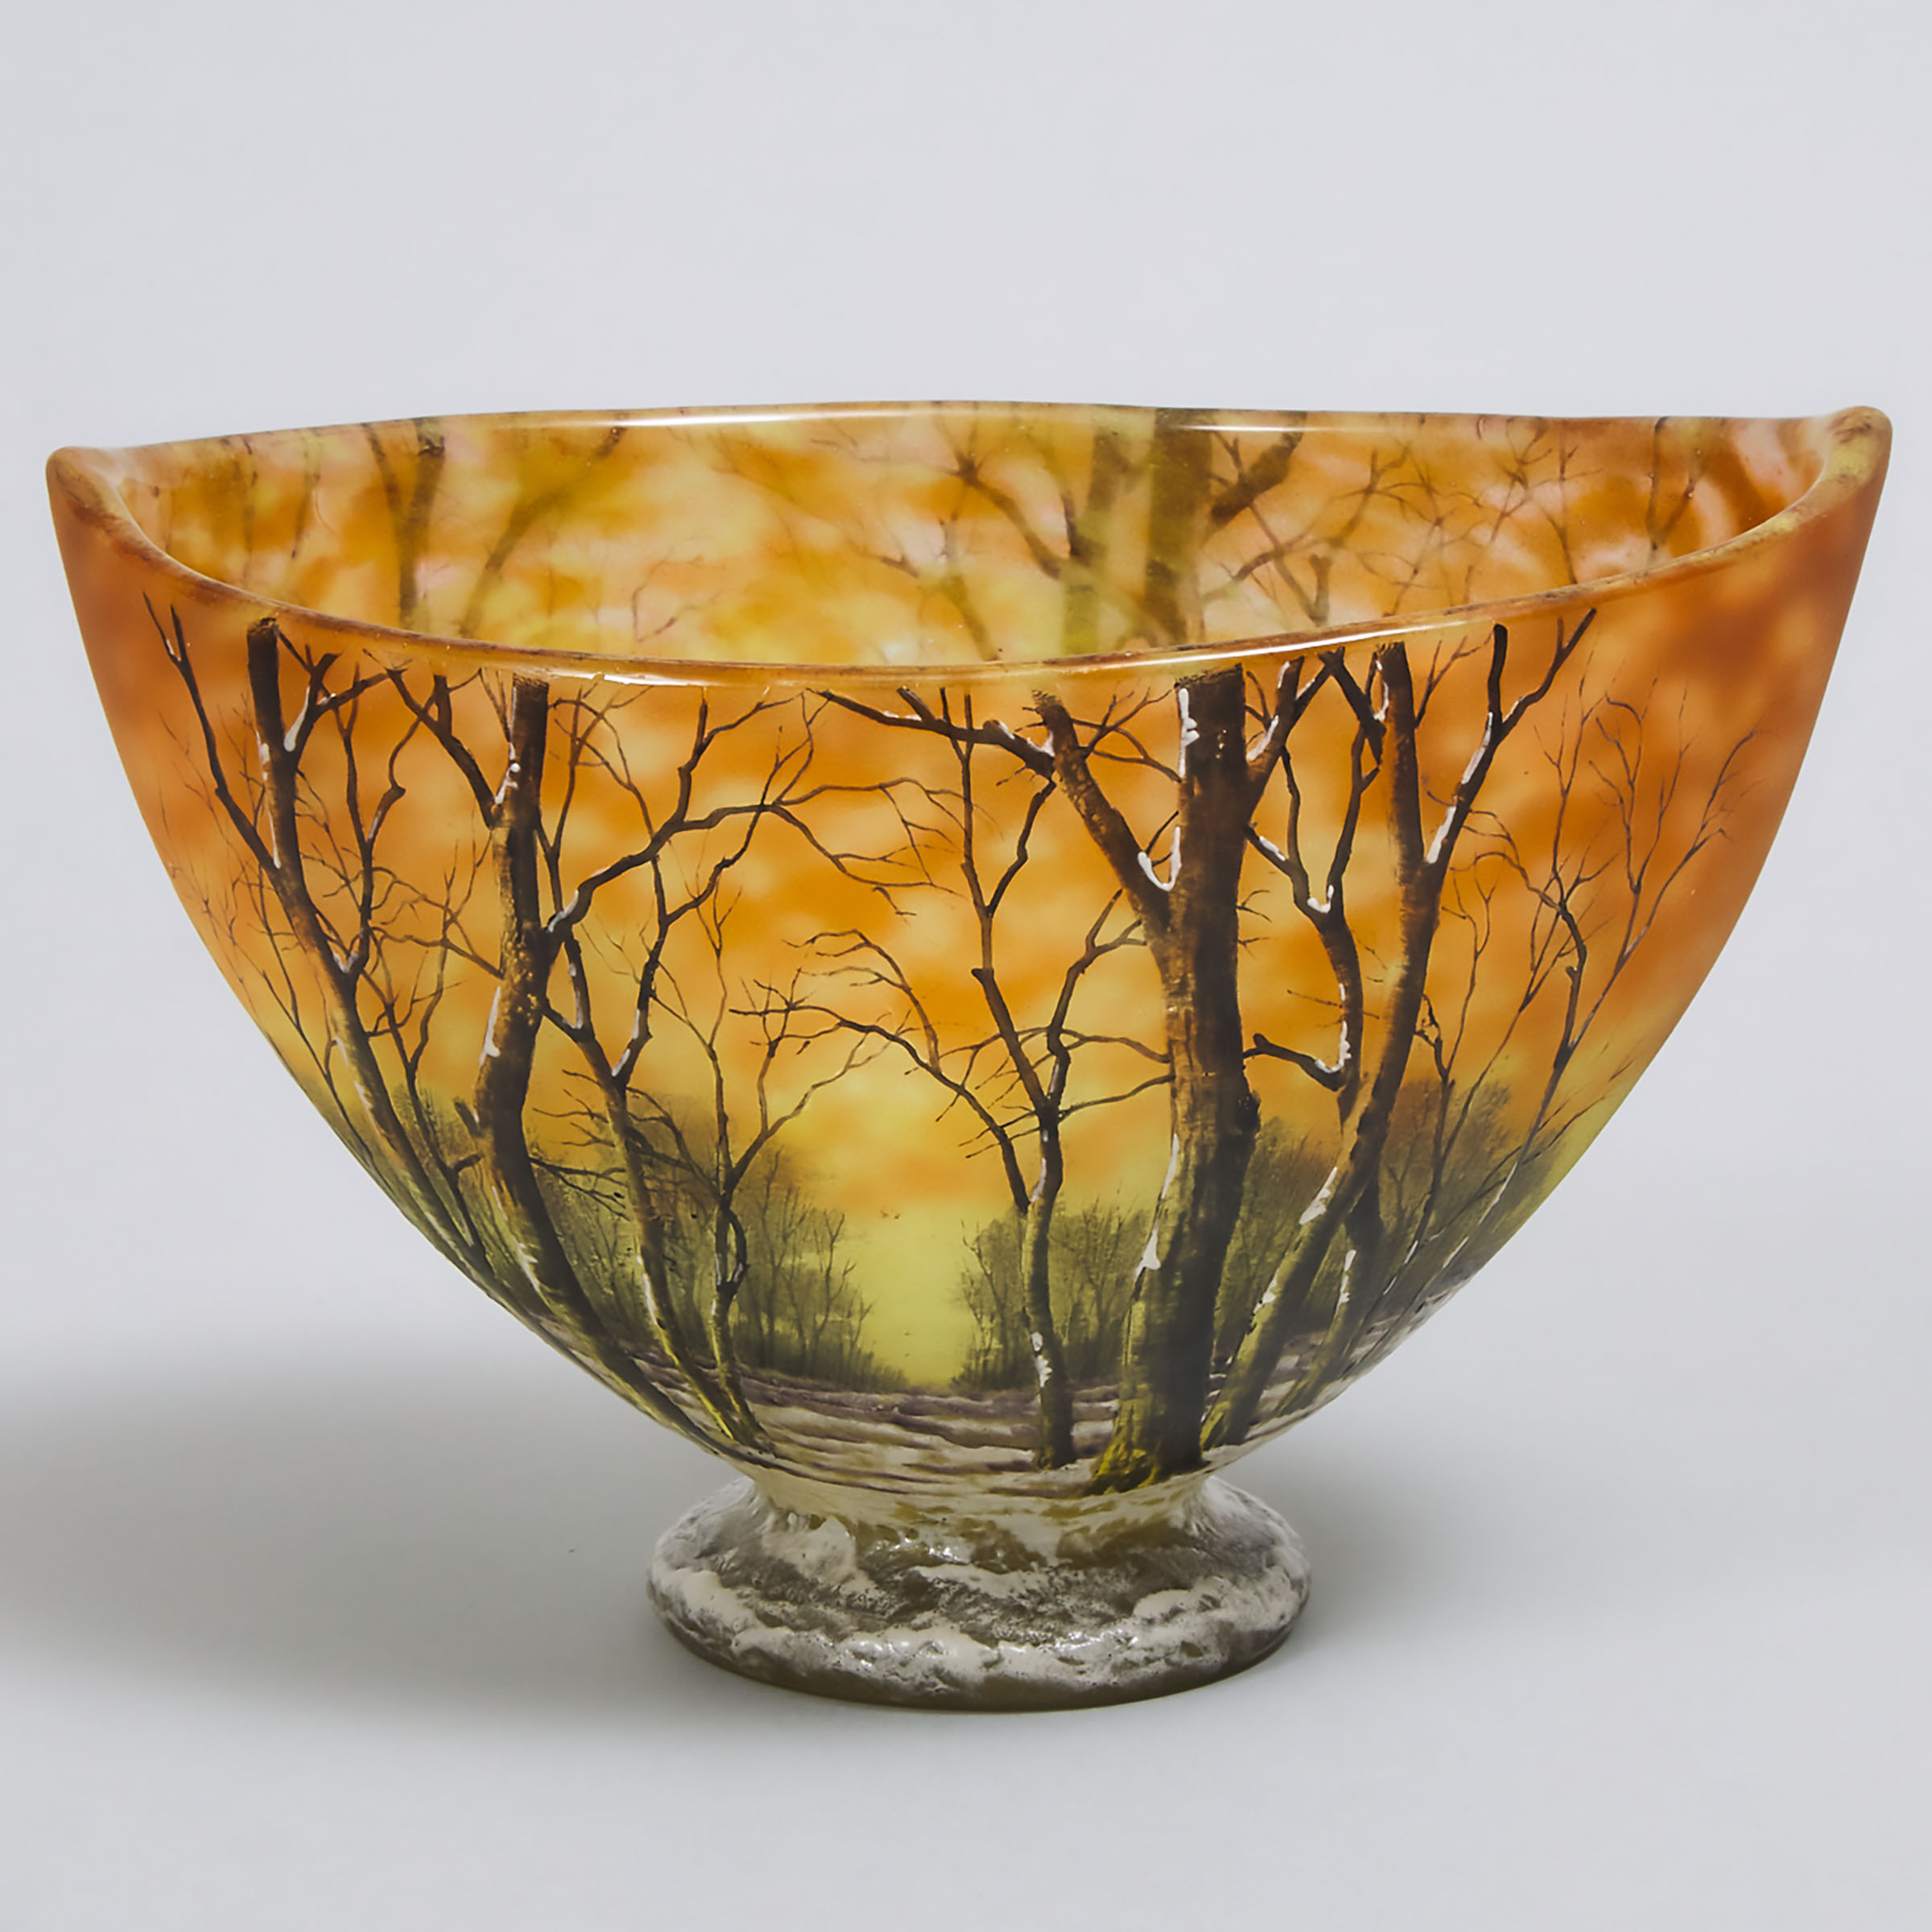 Daum 'Winter' Enameled Cameo Glass Vase, c.1900